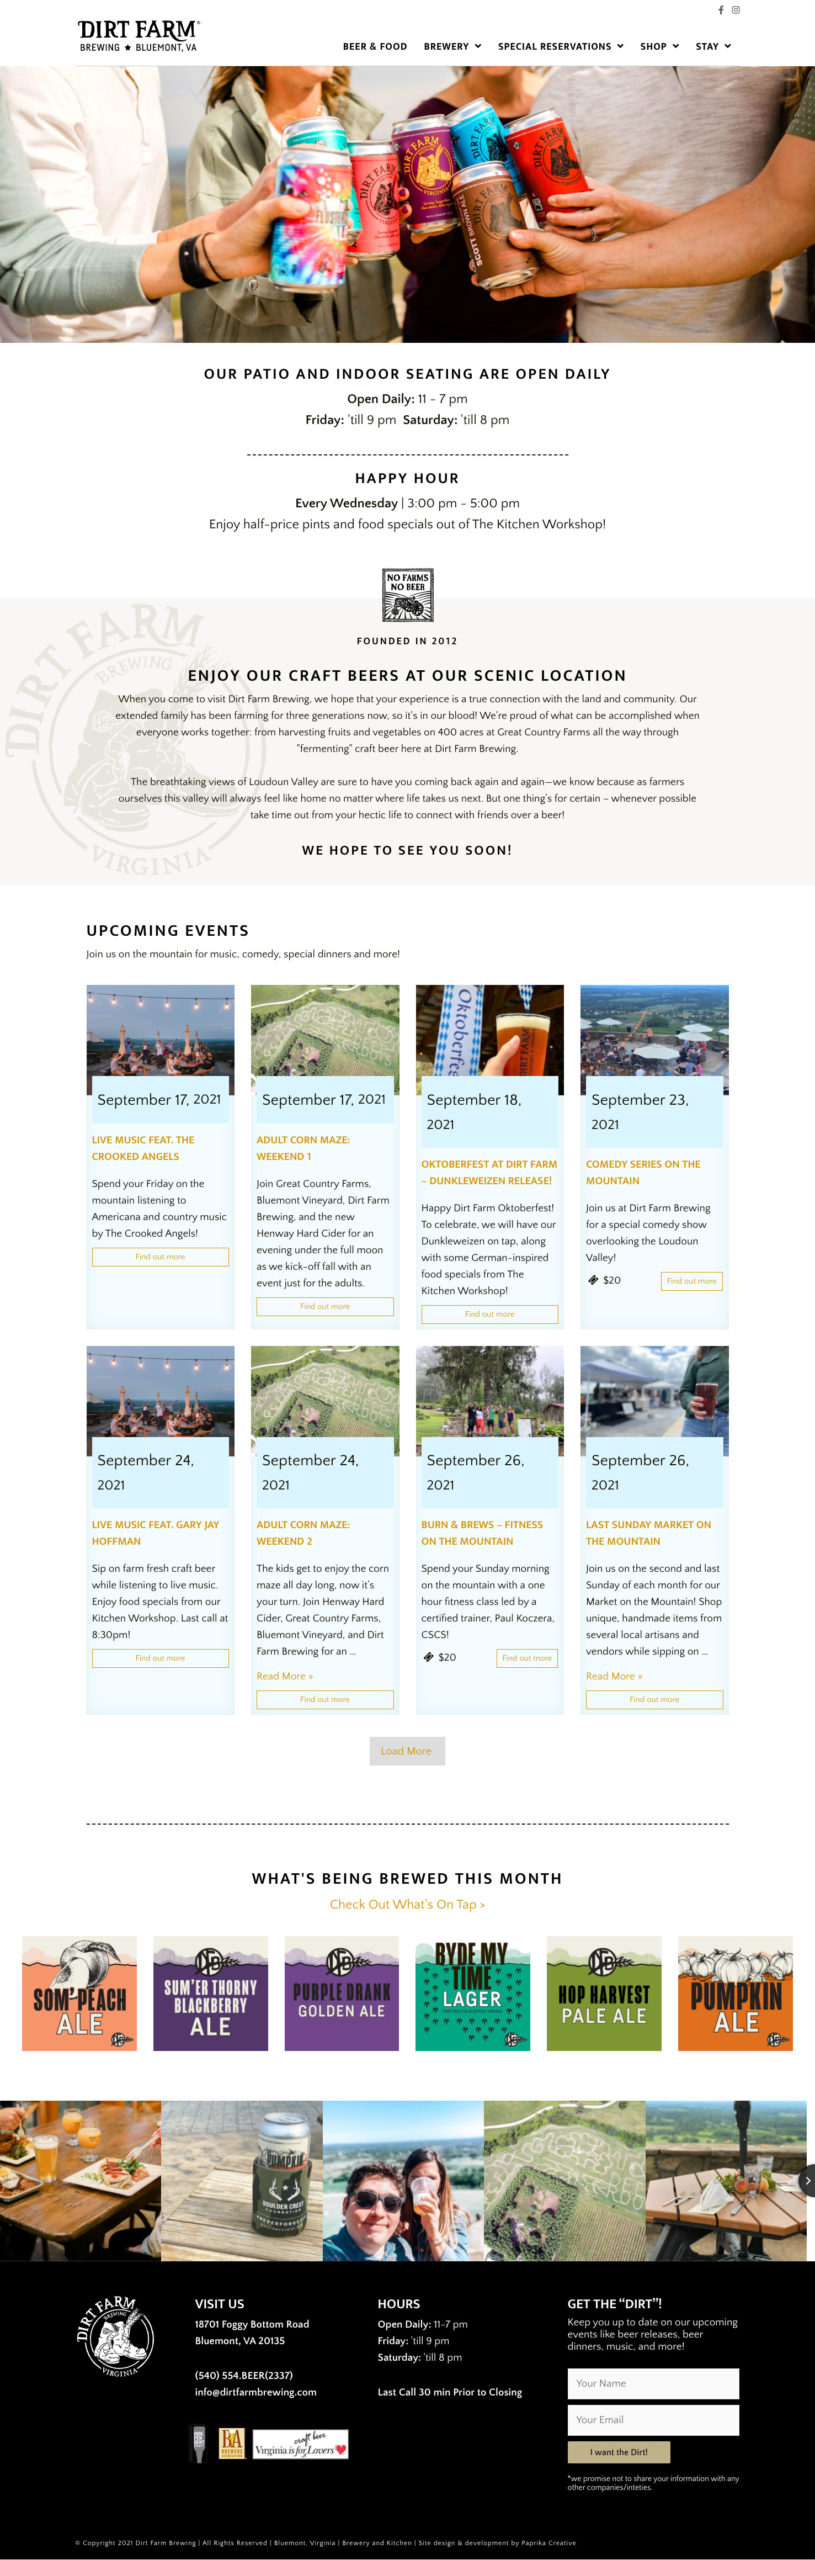 Dirt Farm Brewing Home Page Website Design 2021